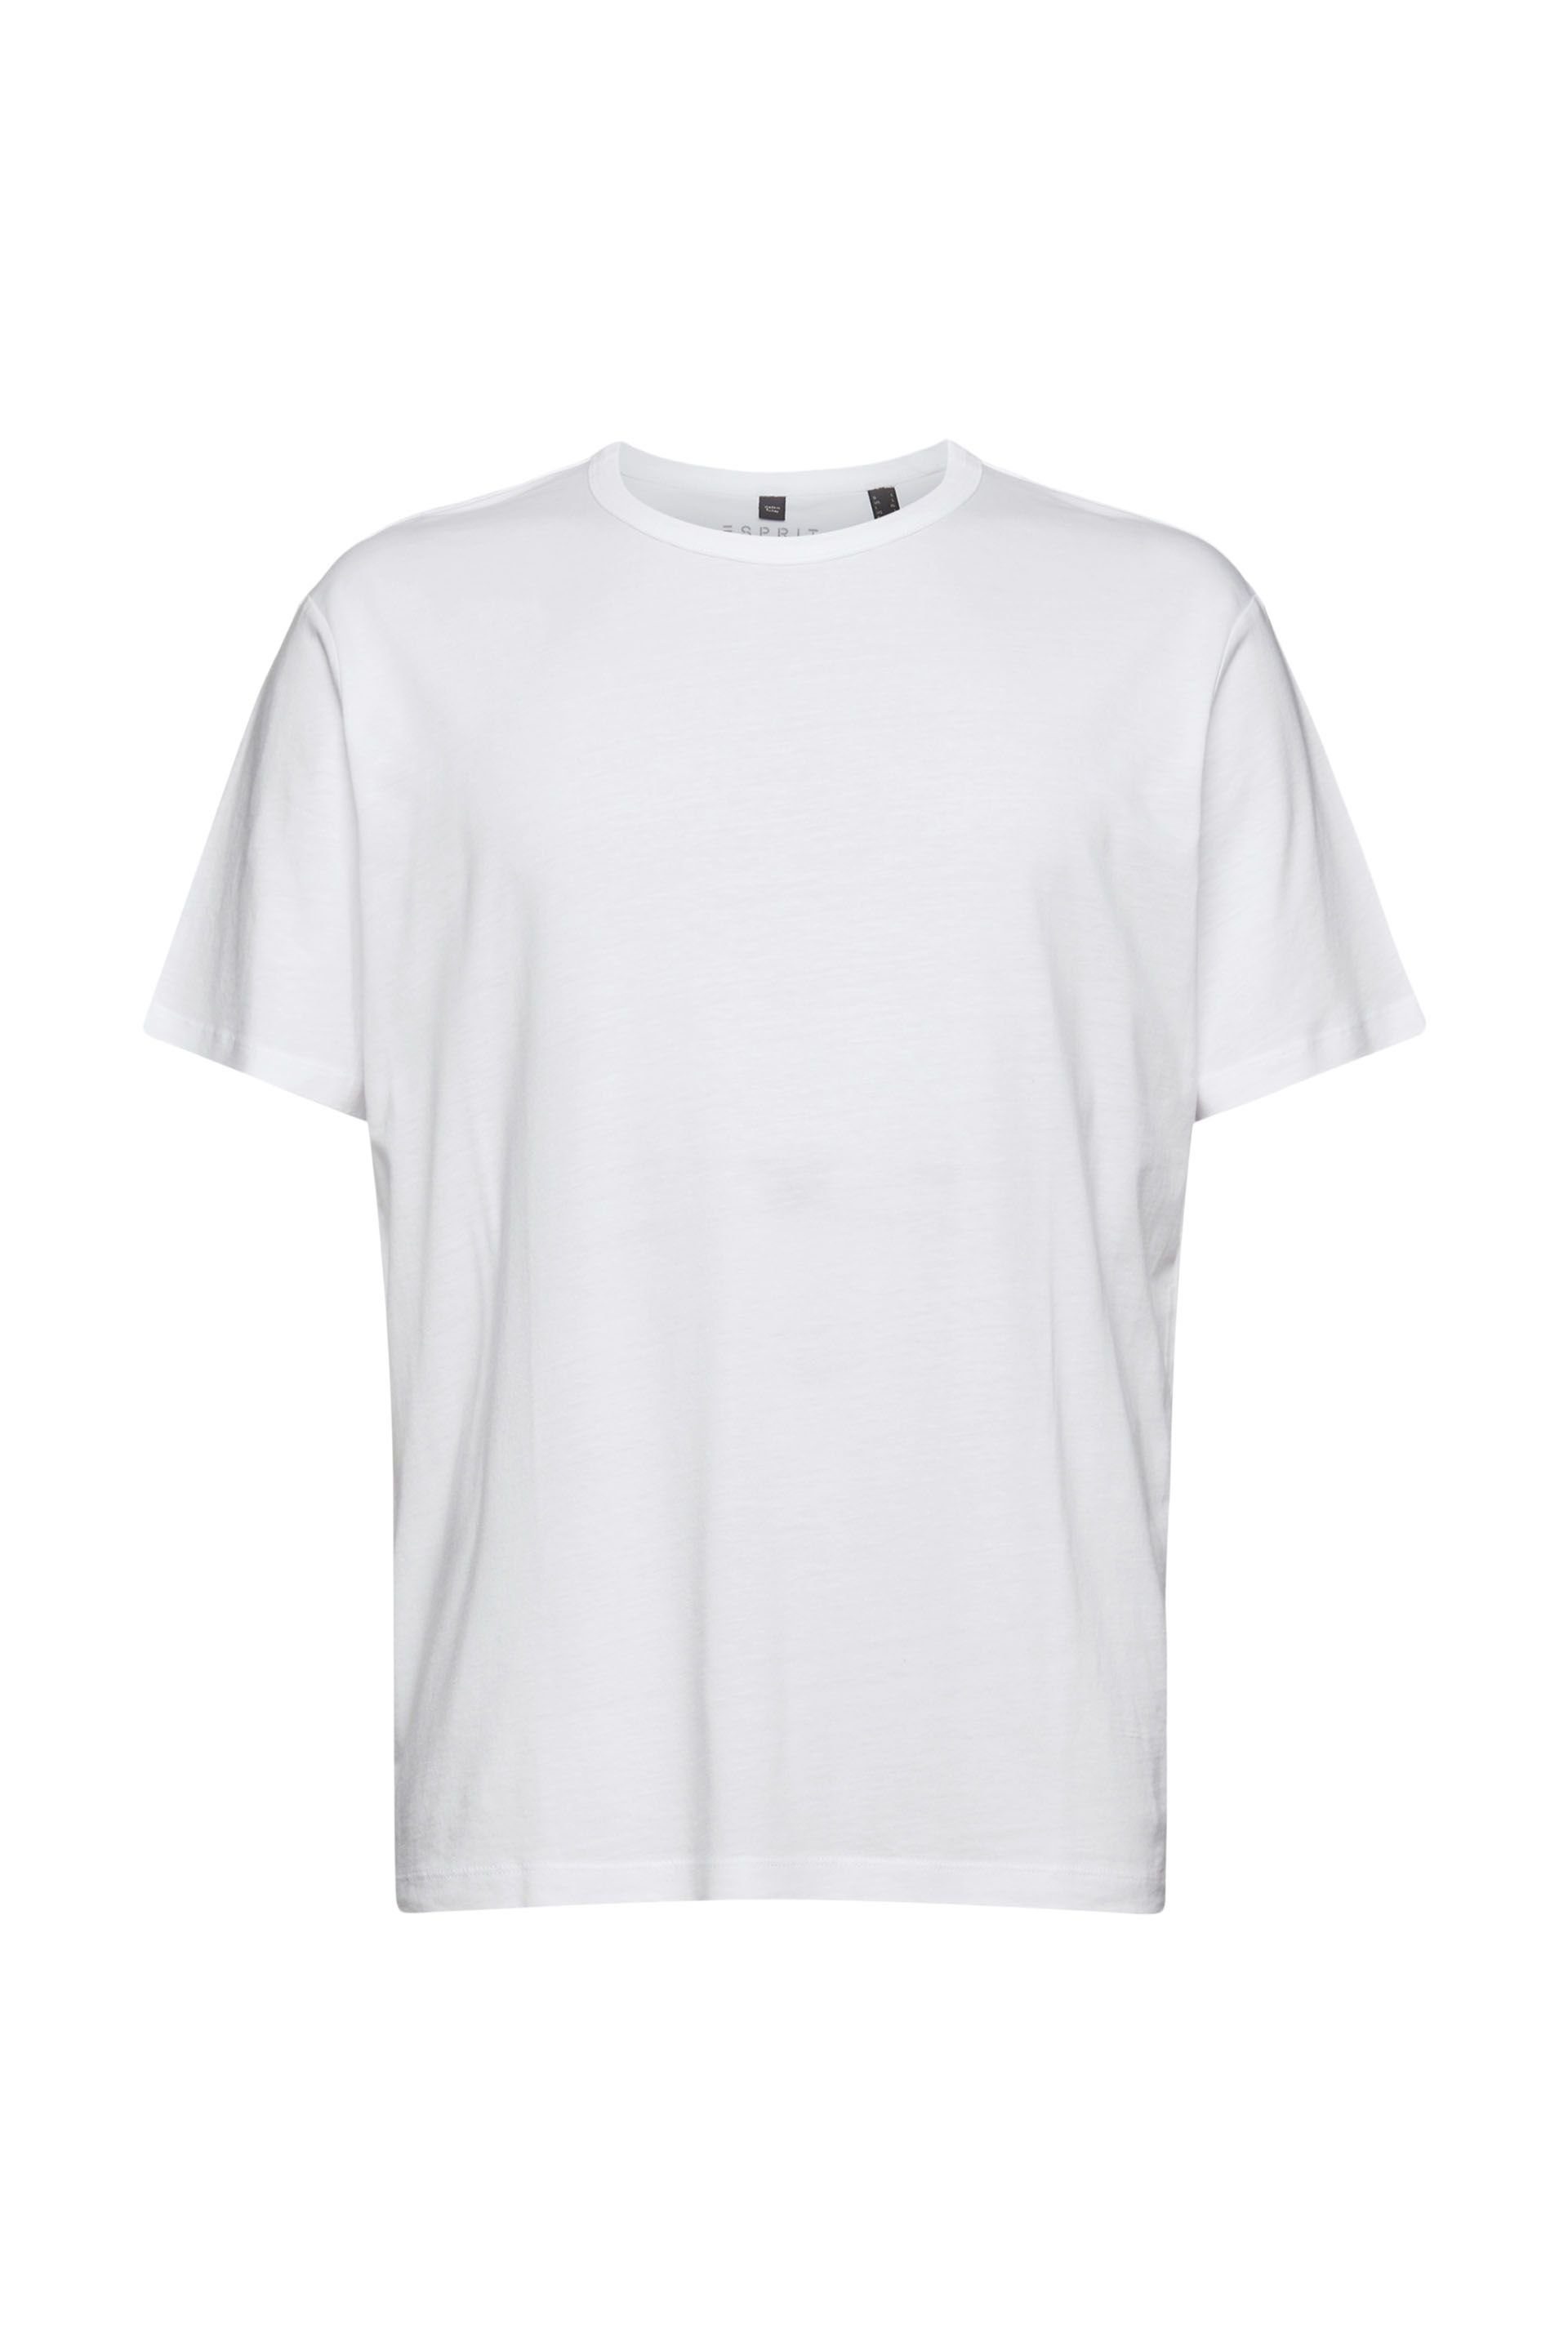 Esprit T-Shirt white